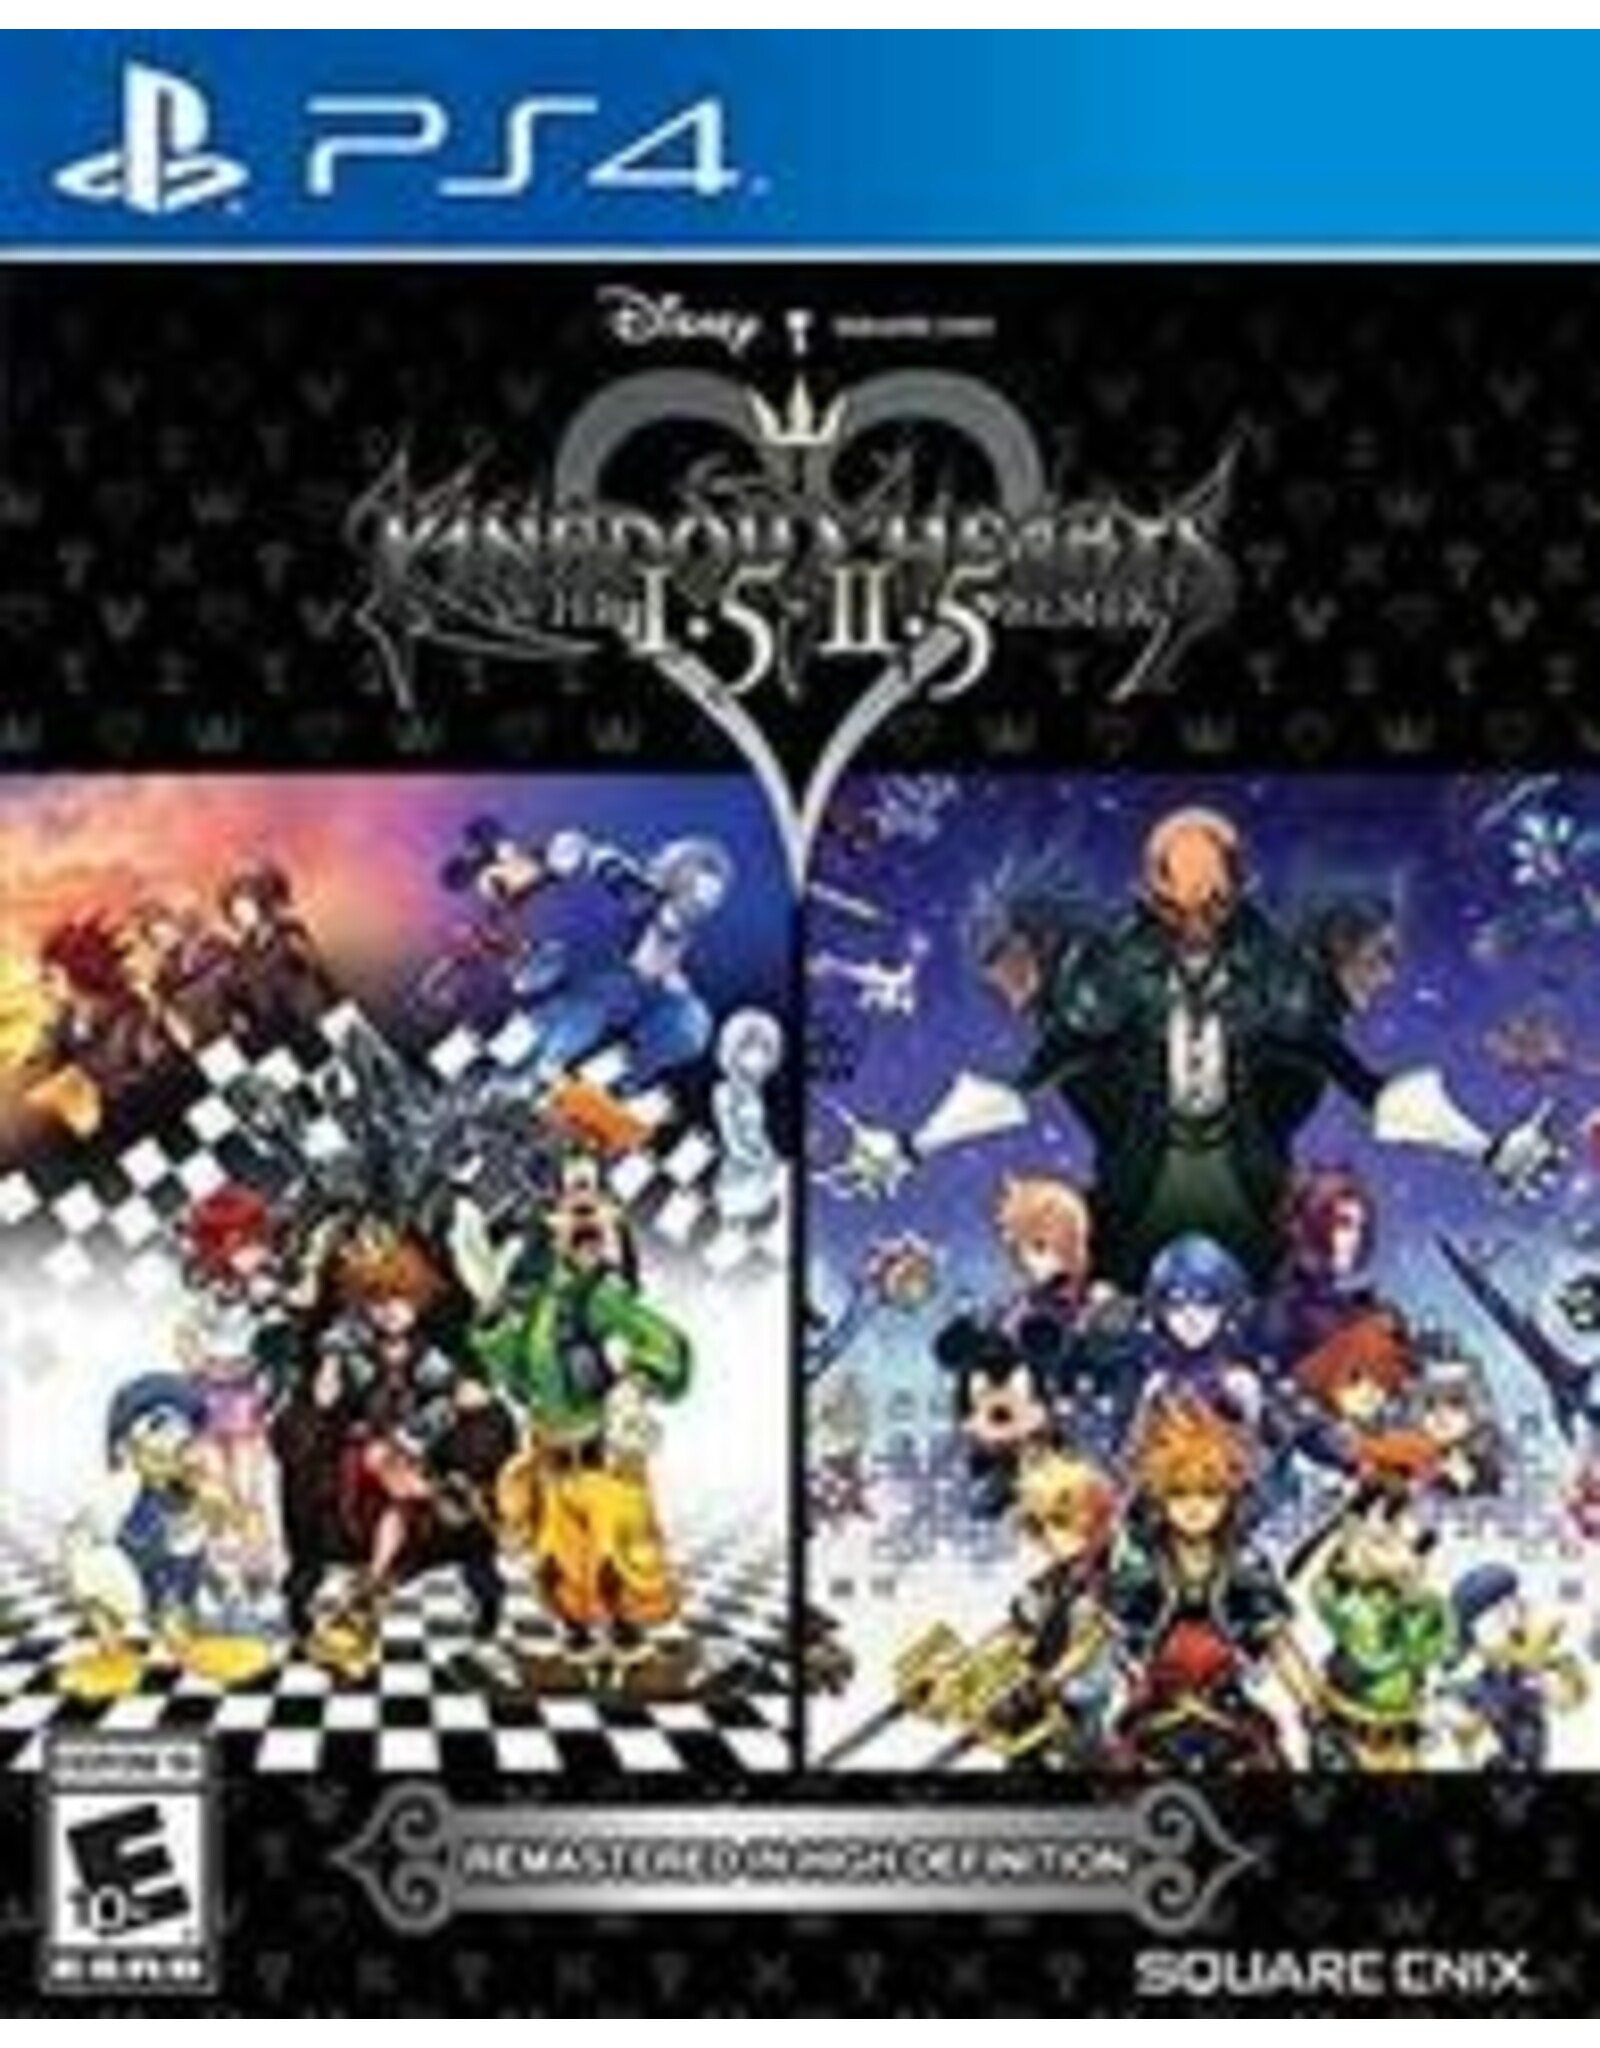 Playstation 4 Kingdom Hearts 1.5 + 2.5 HD Remix (Used)